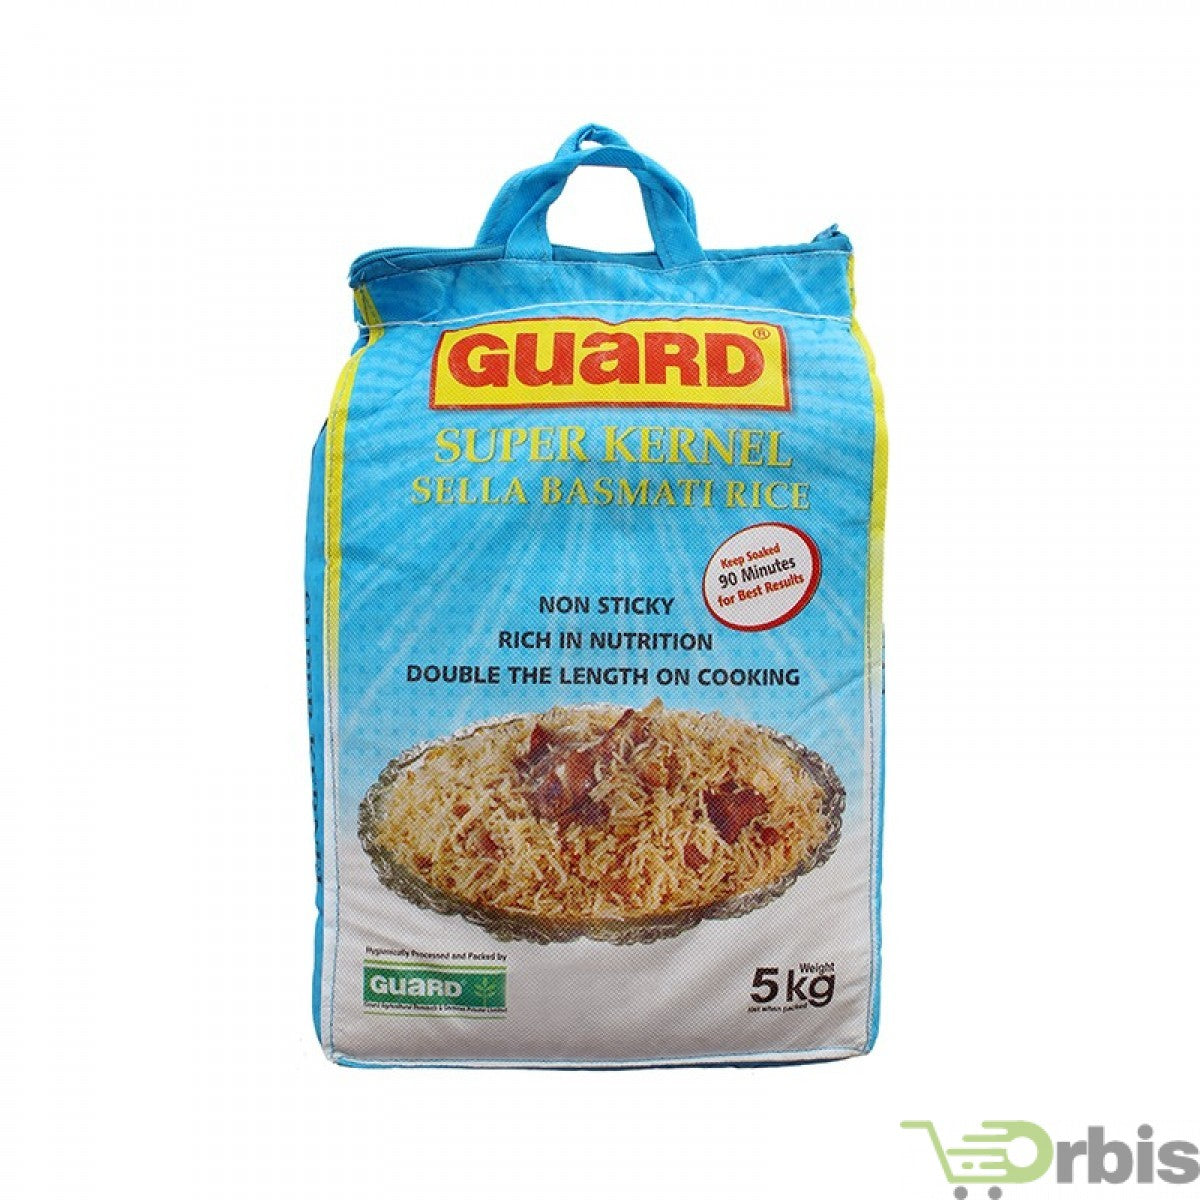 Guard Super Kernel Sella Basmati Rice 5kg